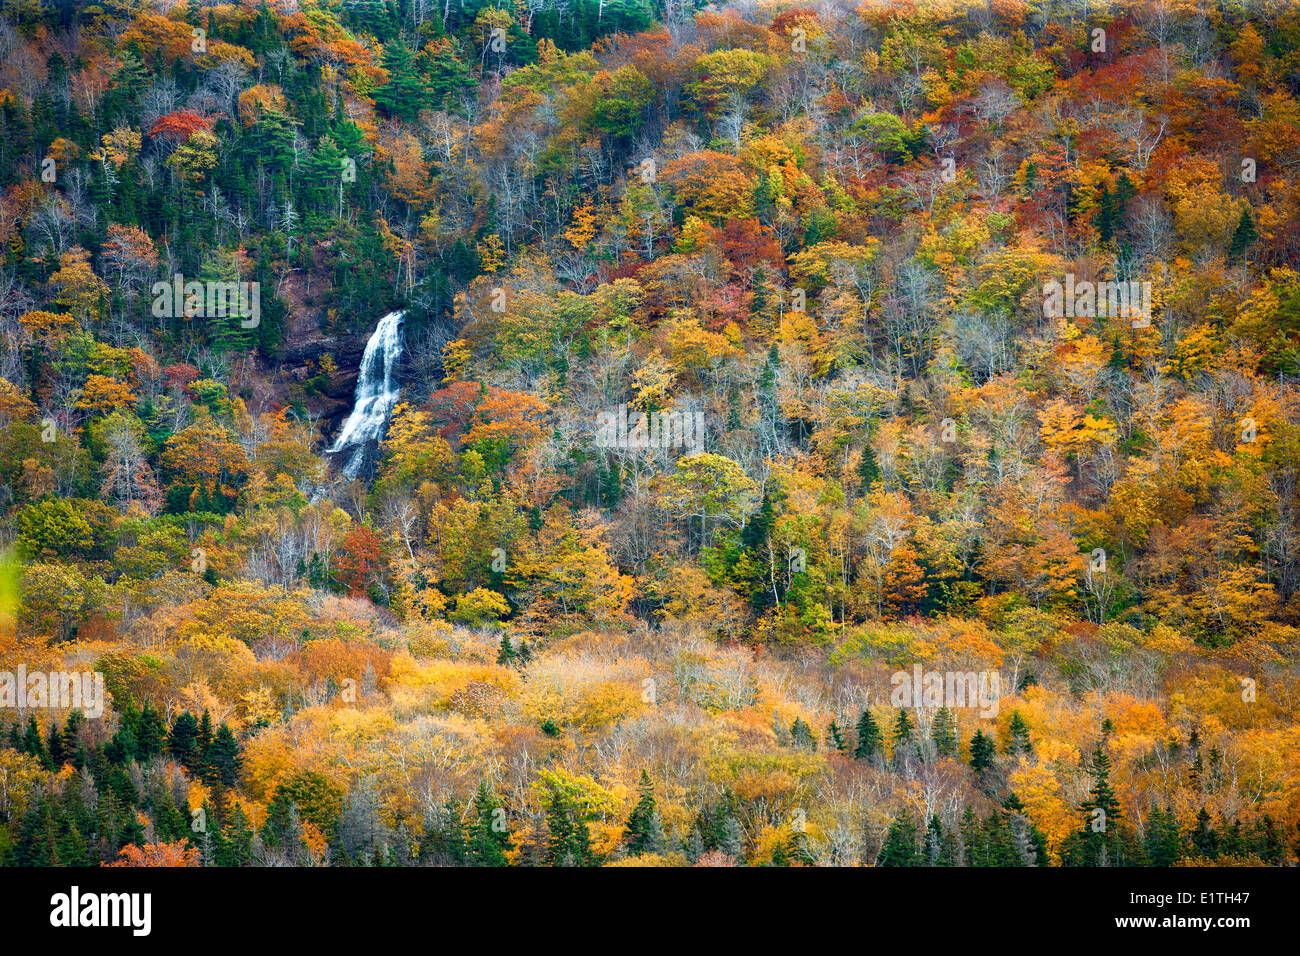 View of Beulach Ban Falls, Cape Breton Highlands National Park, Cape Breton, Nova Scotia, Canada Stock Photo